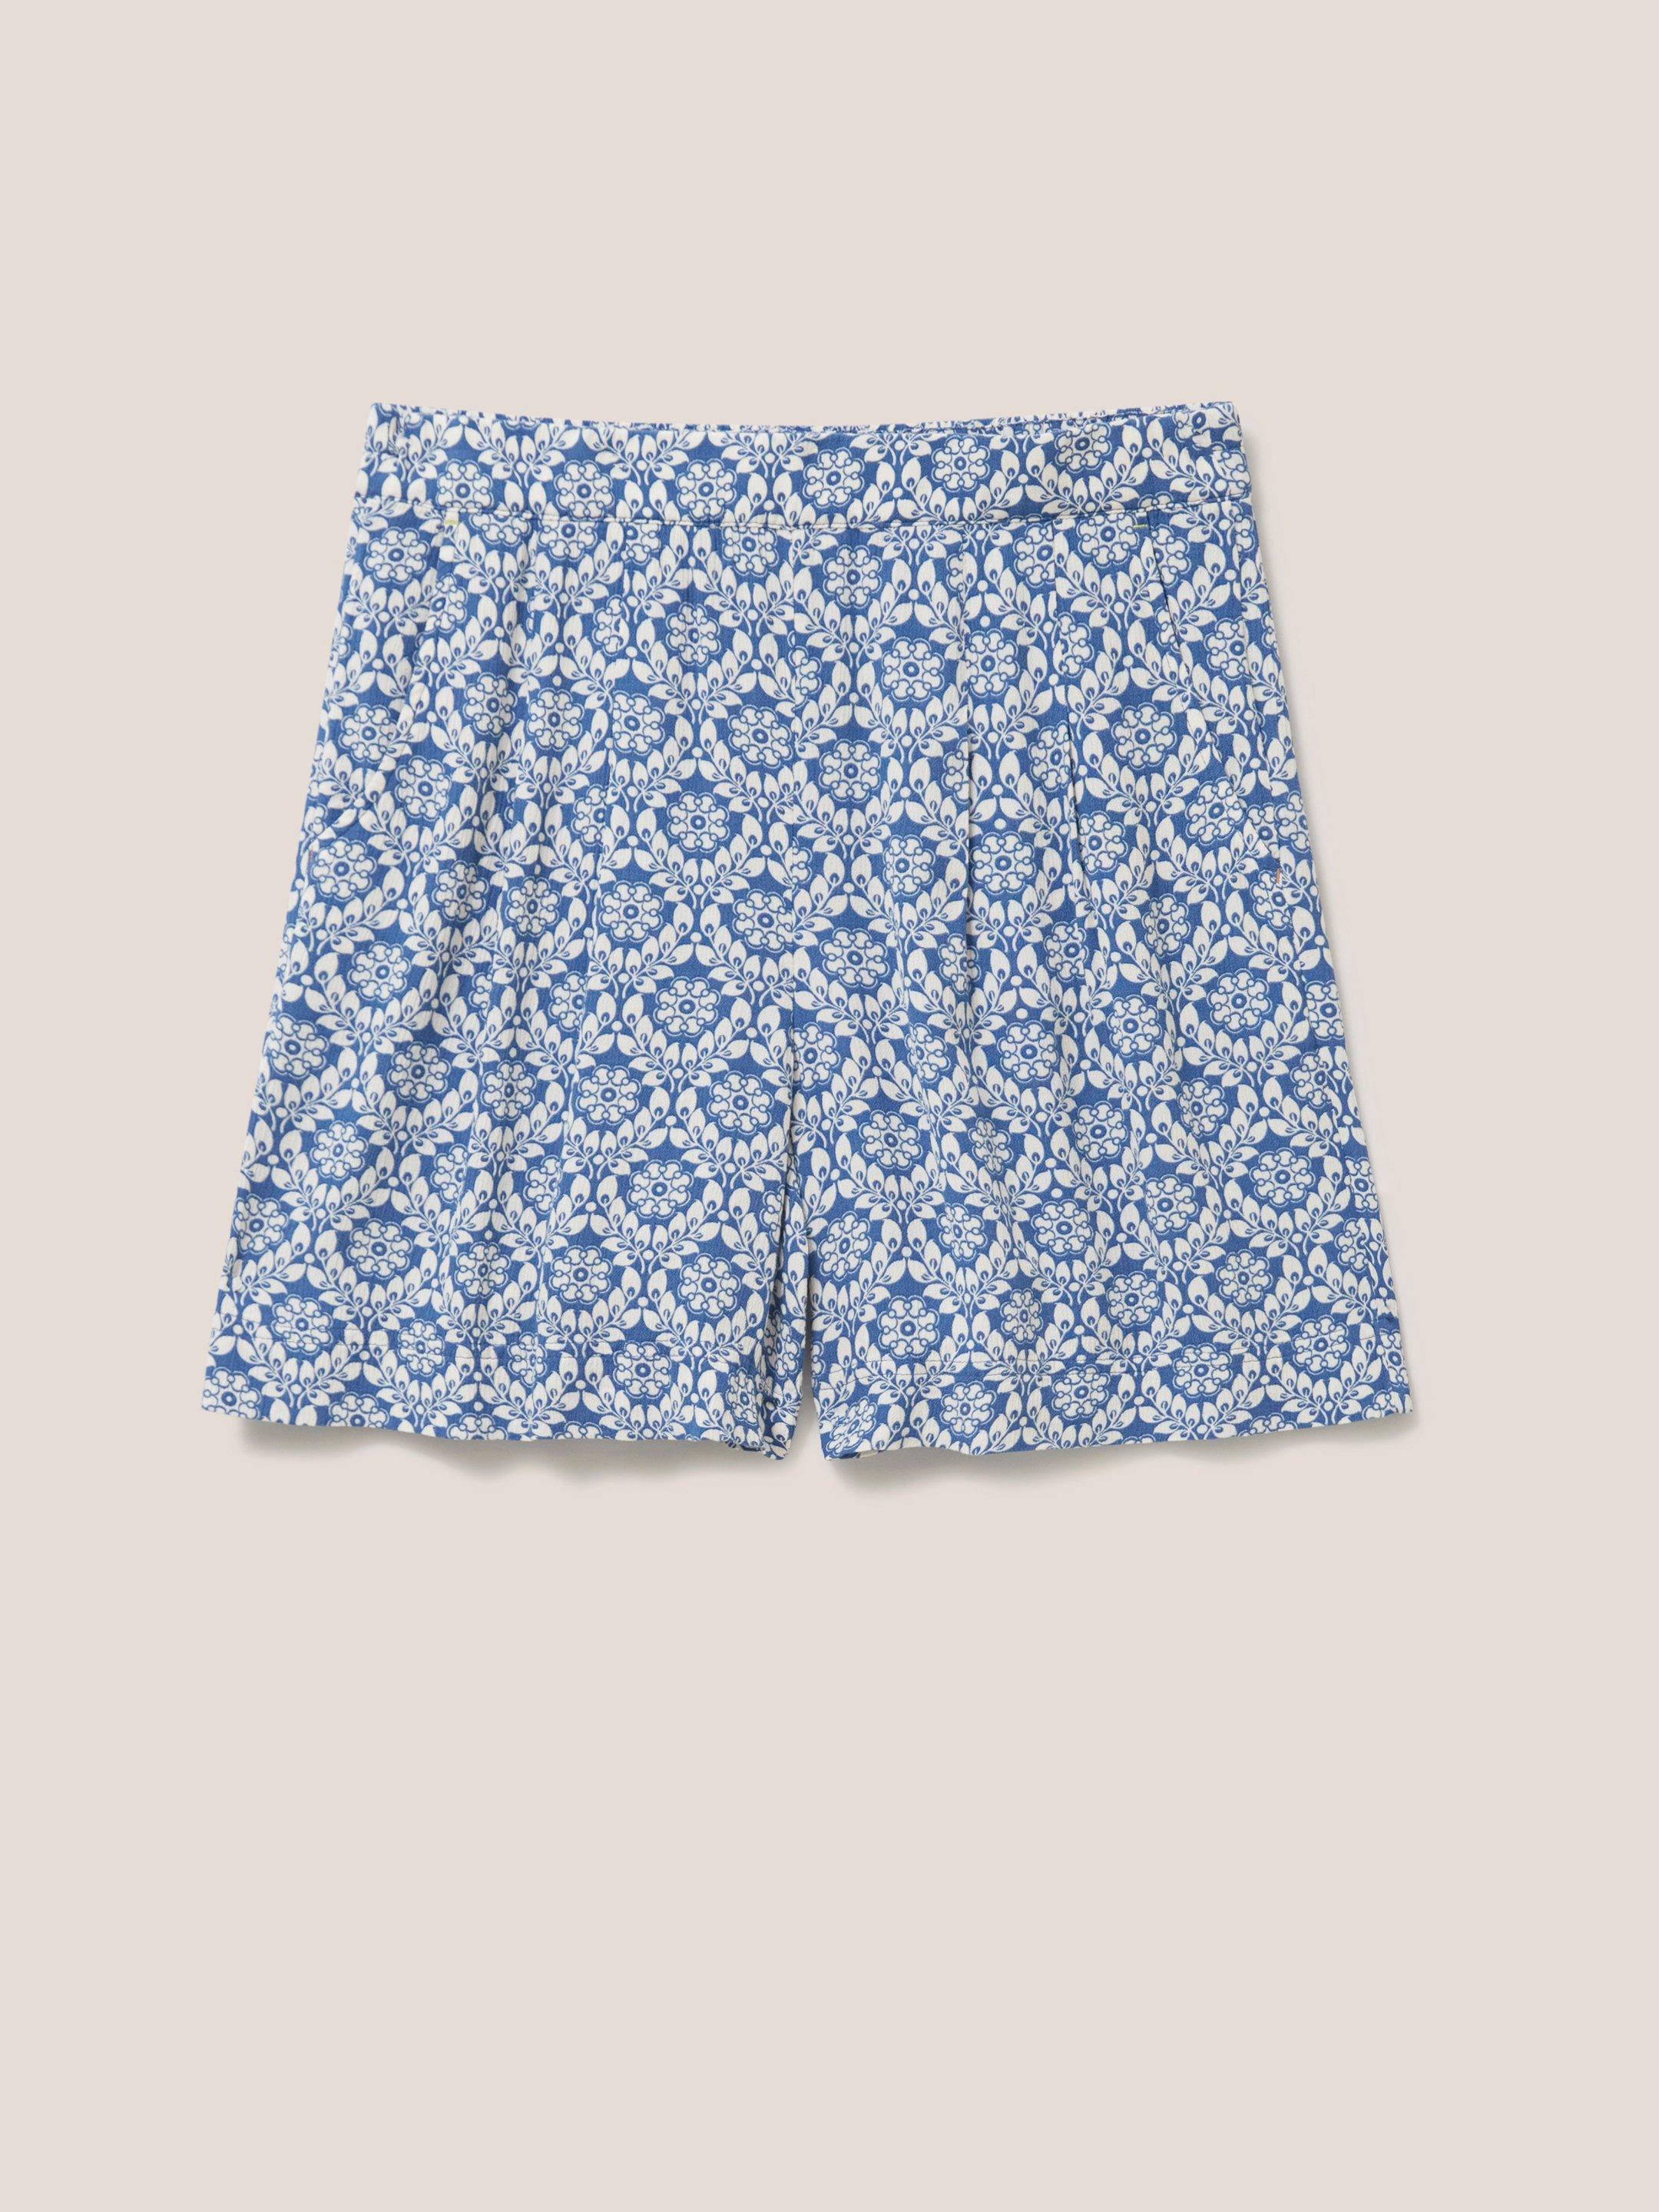 Matilda Crinkle Shorts in BLUE MLT - FLAT FRONT